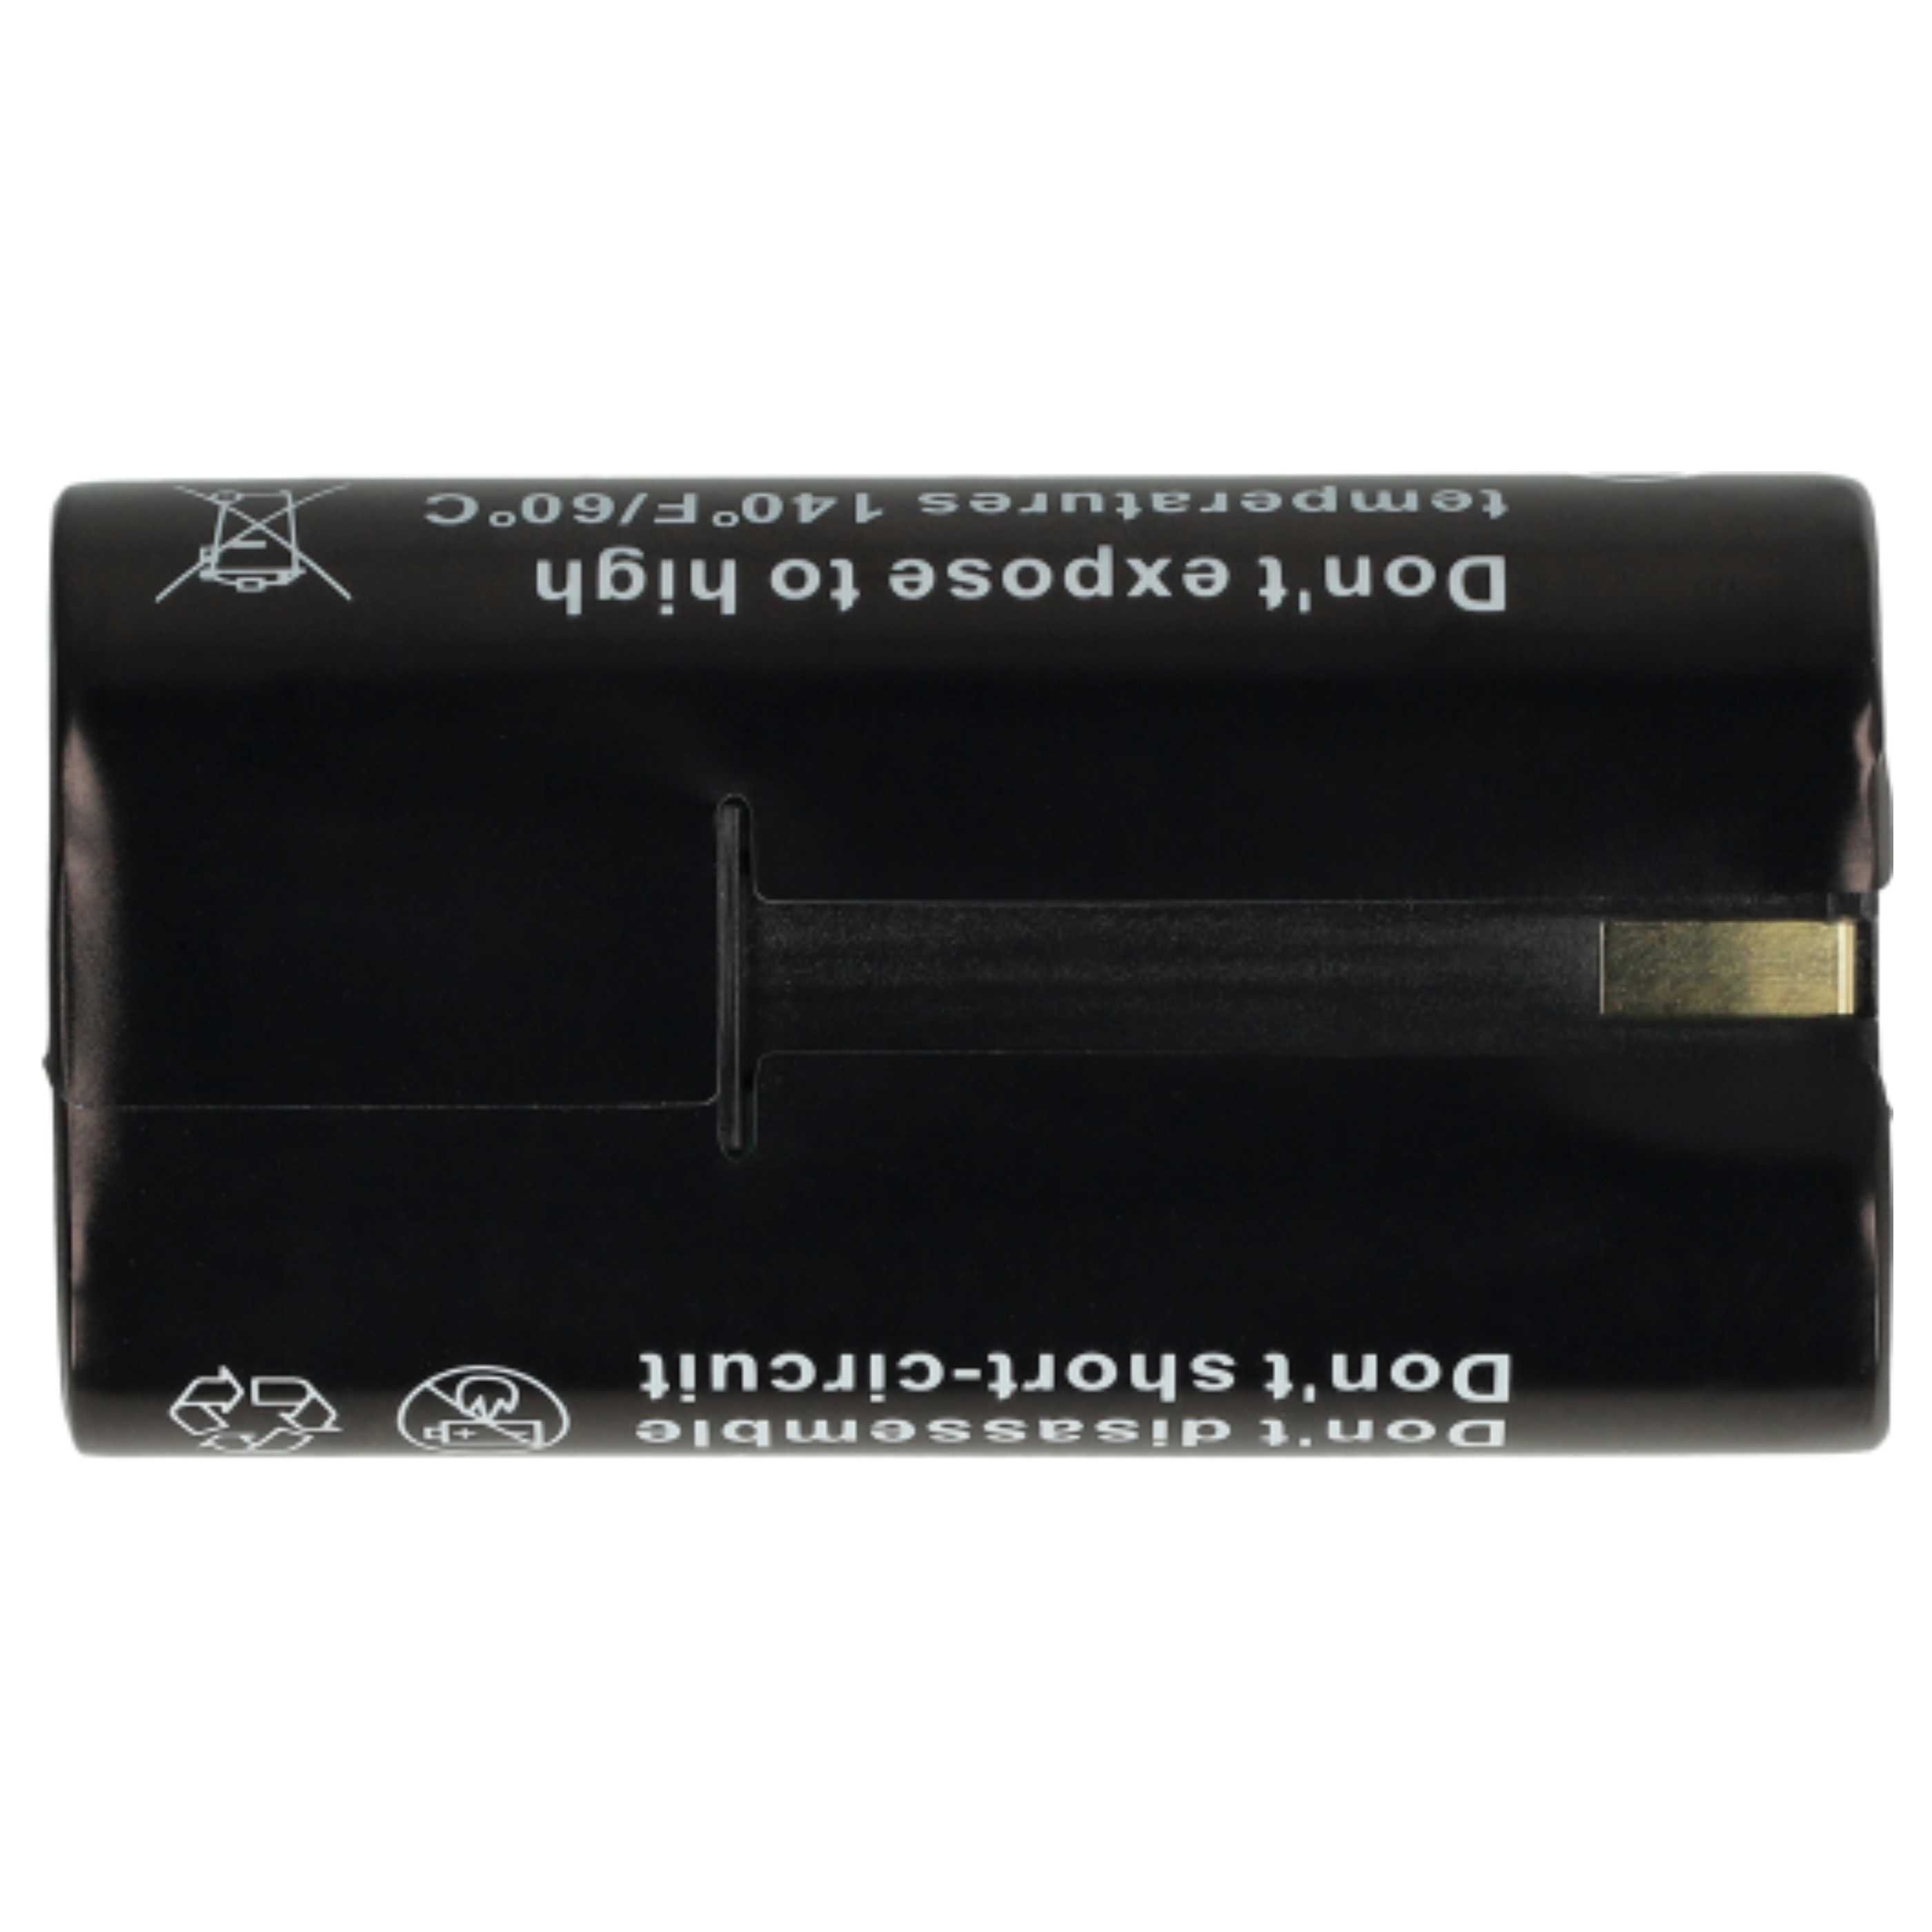 Batería reemplaza Ricoh DB-50 para cámara Ricoh - 1520 mAh 3,6 V Li-Ion